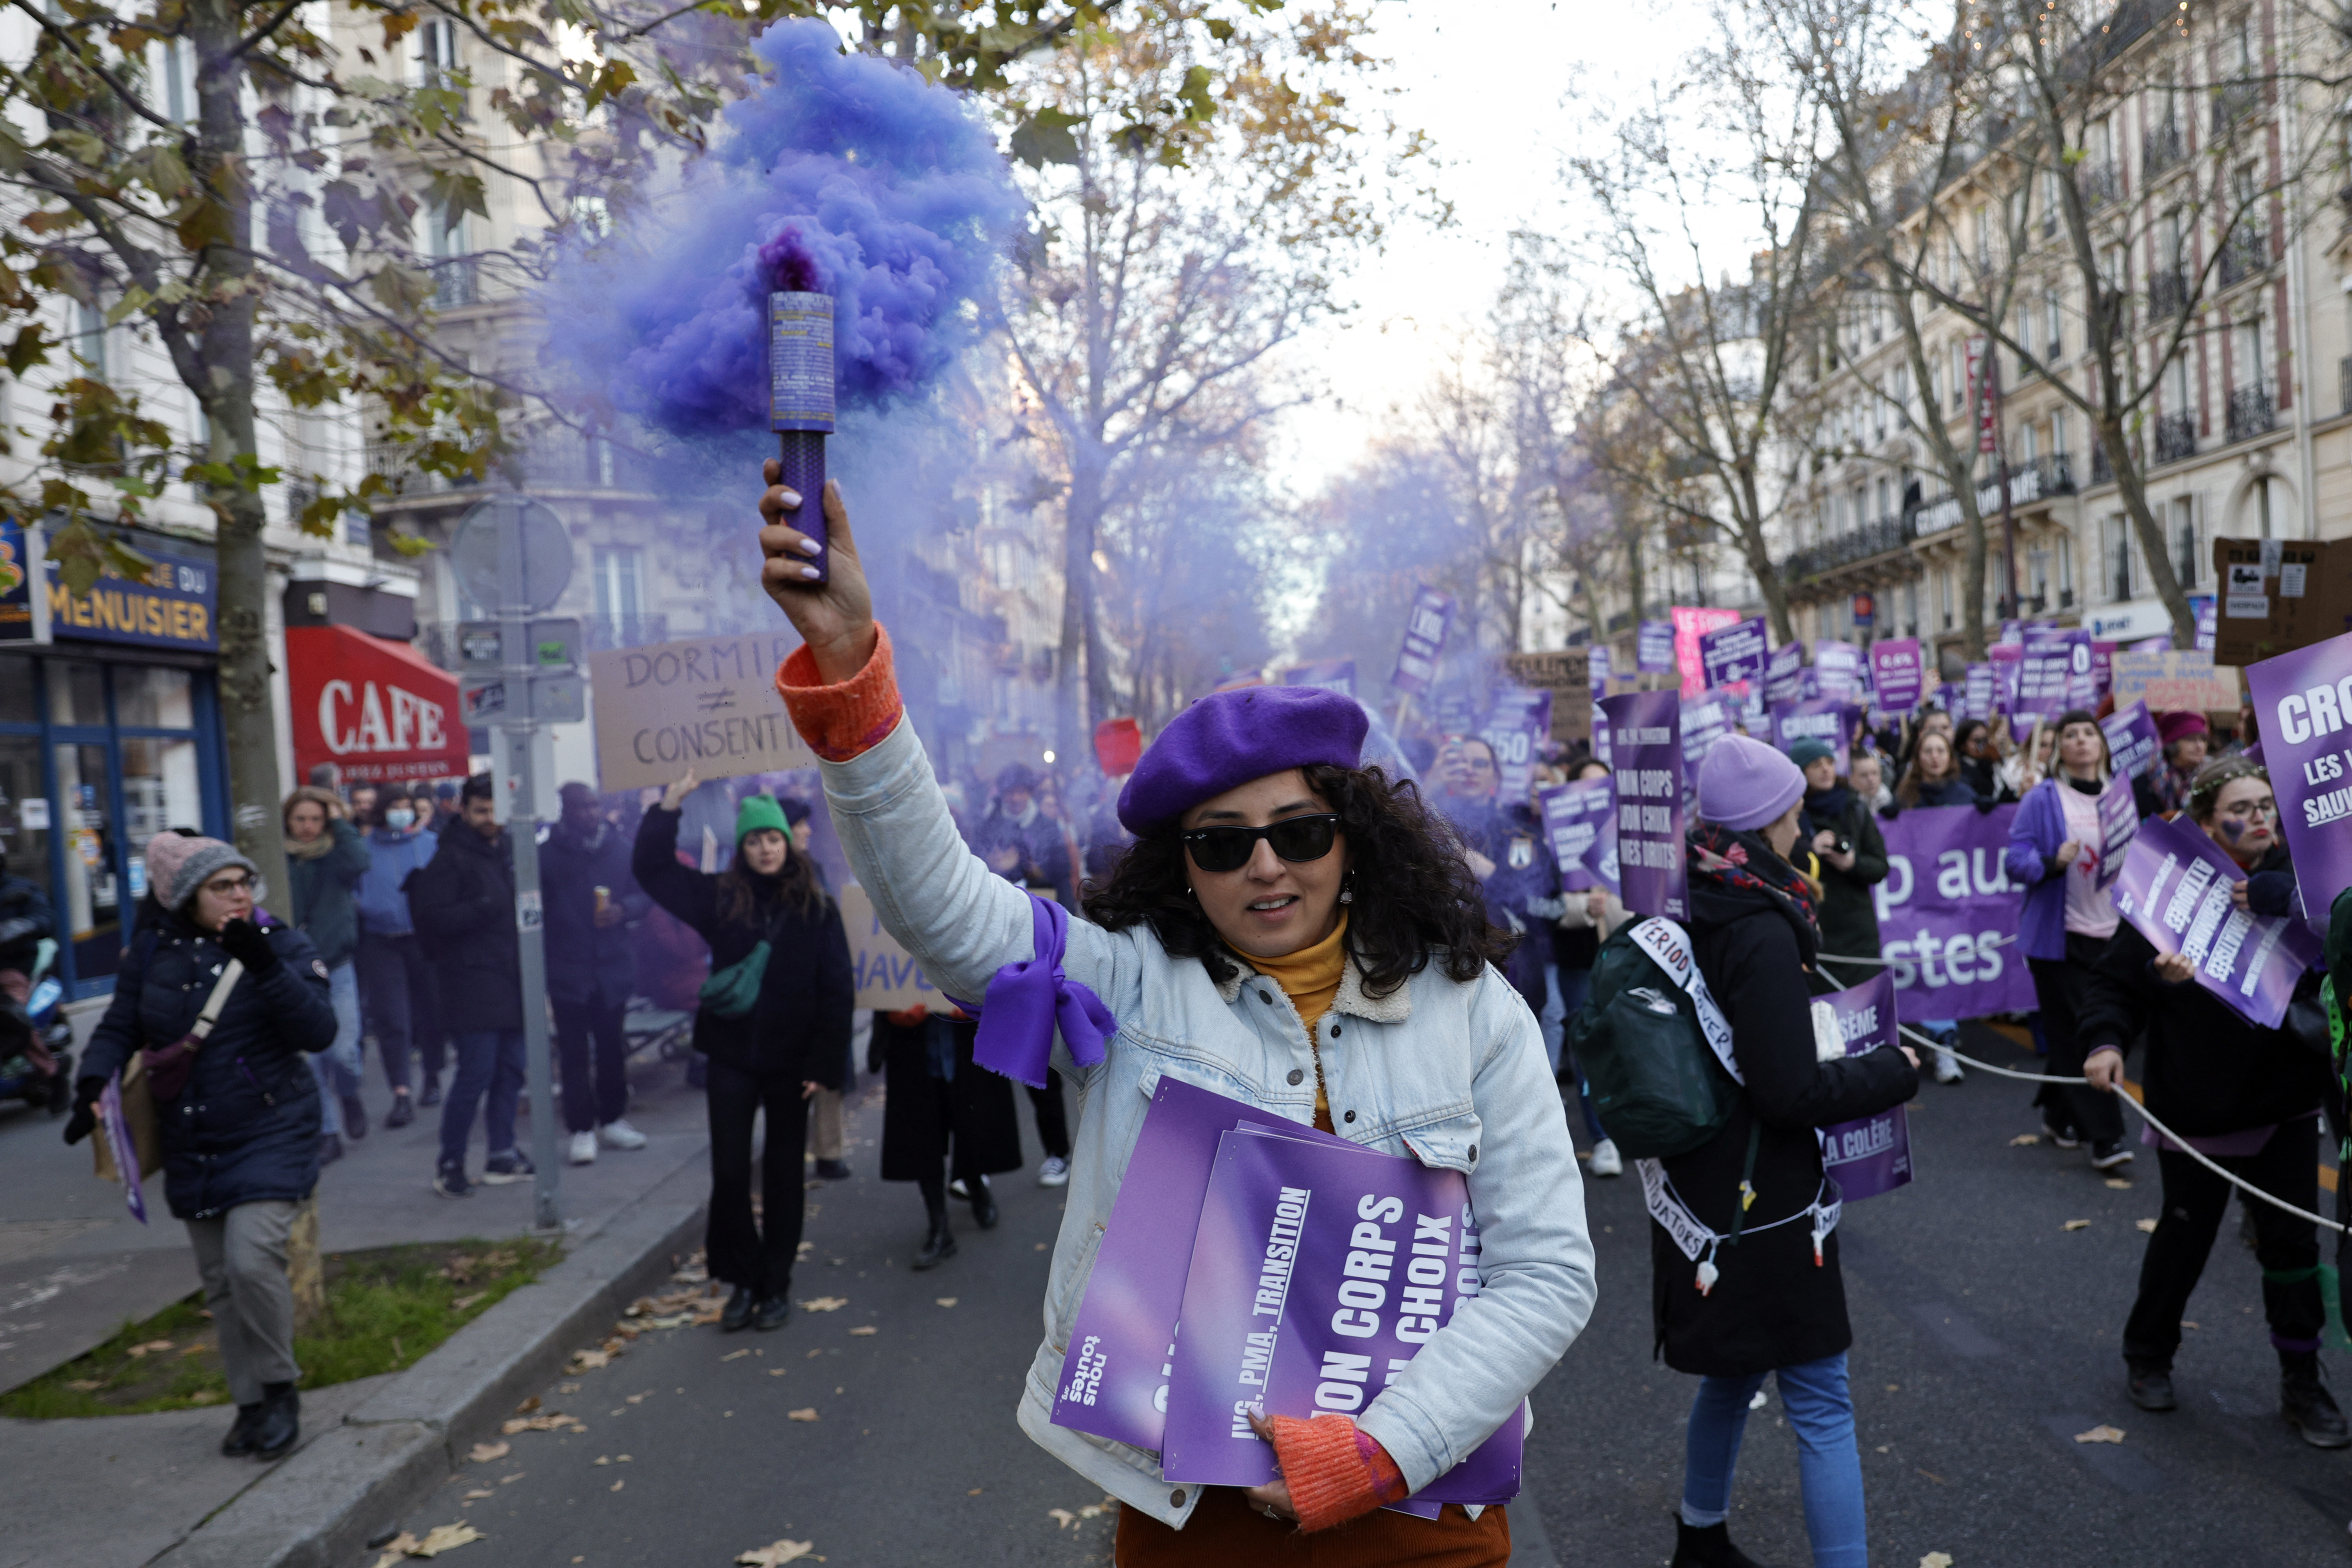 People dressed up in purple in Paris for a march on Saturday. /Geoffroy Van der Hasselt/AFP